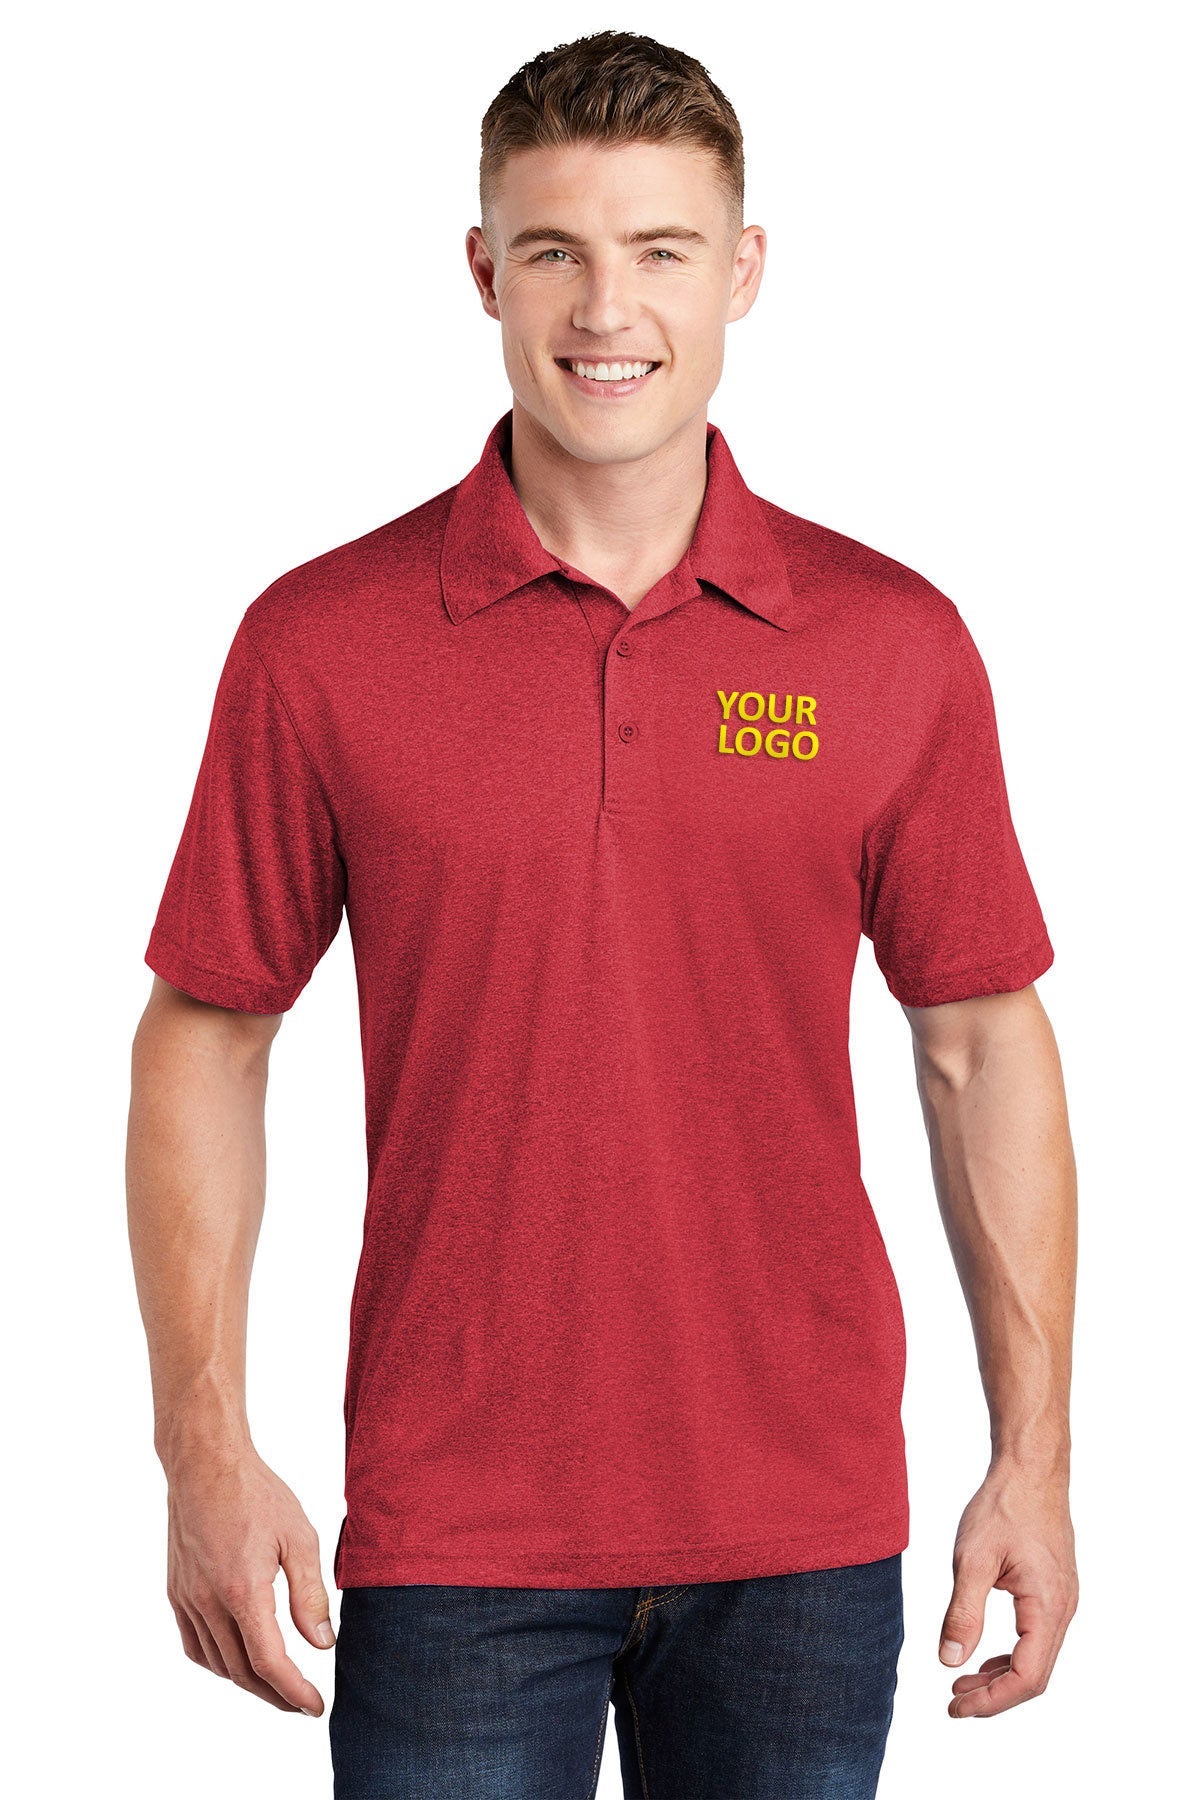 Sport-Tek Scarlet Heather ST660 polo work shirts with company logo